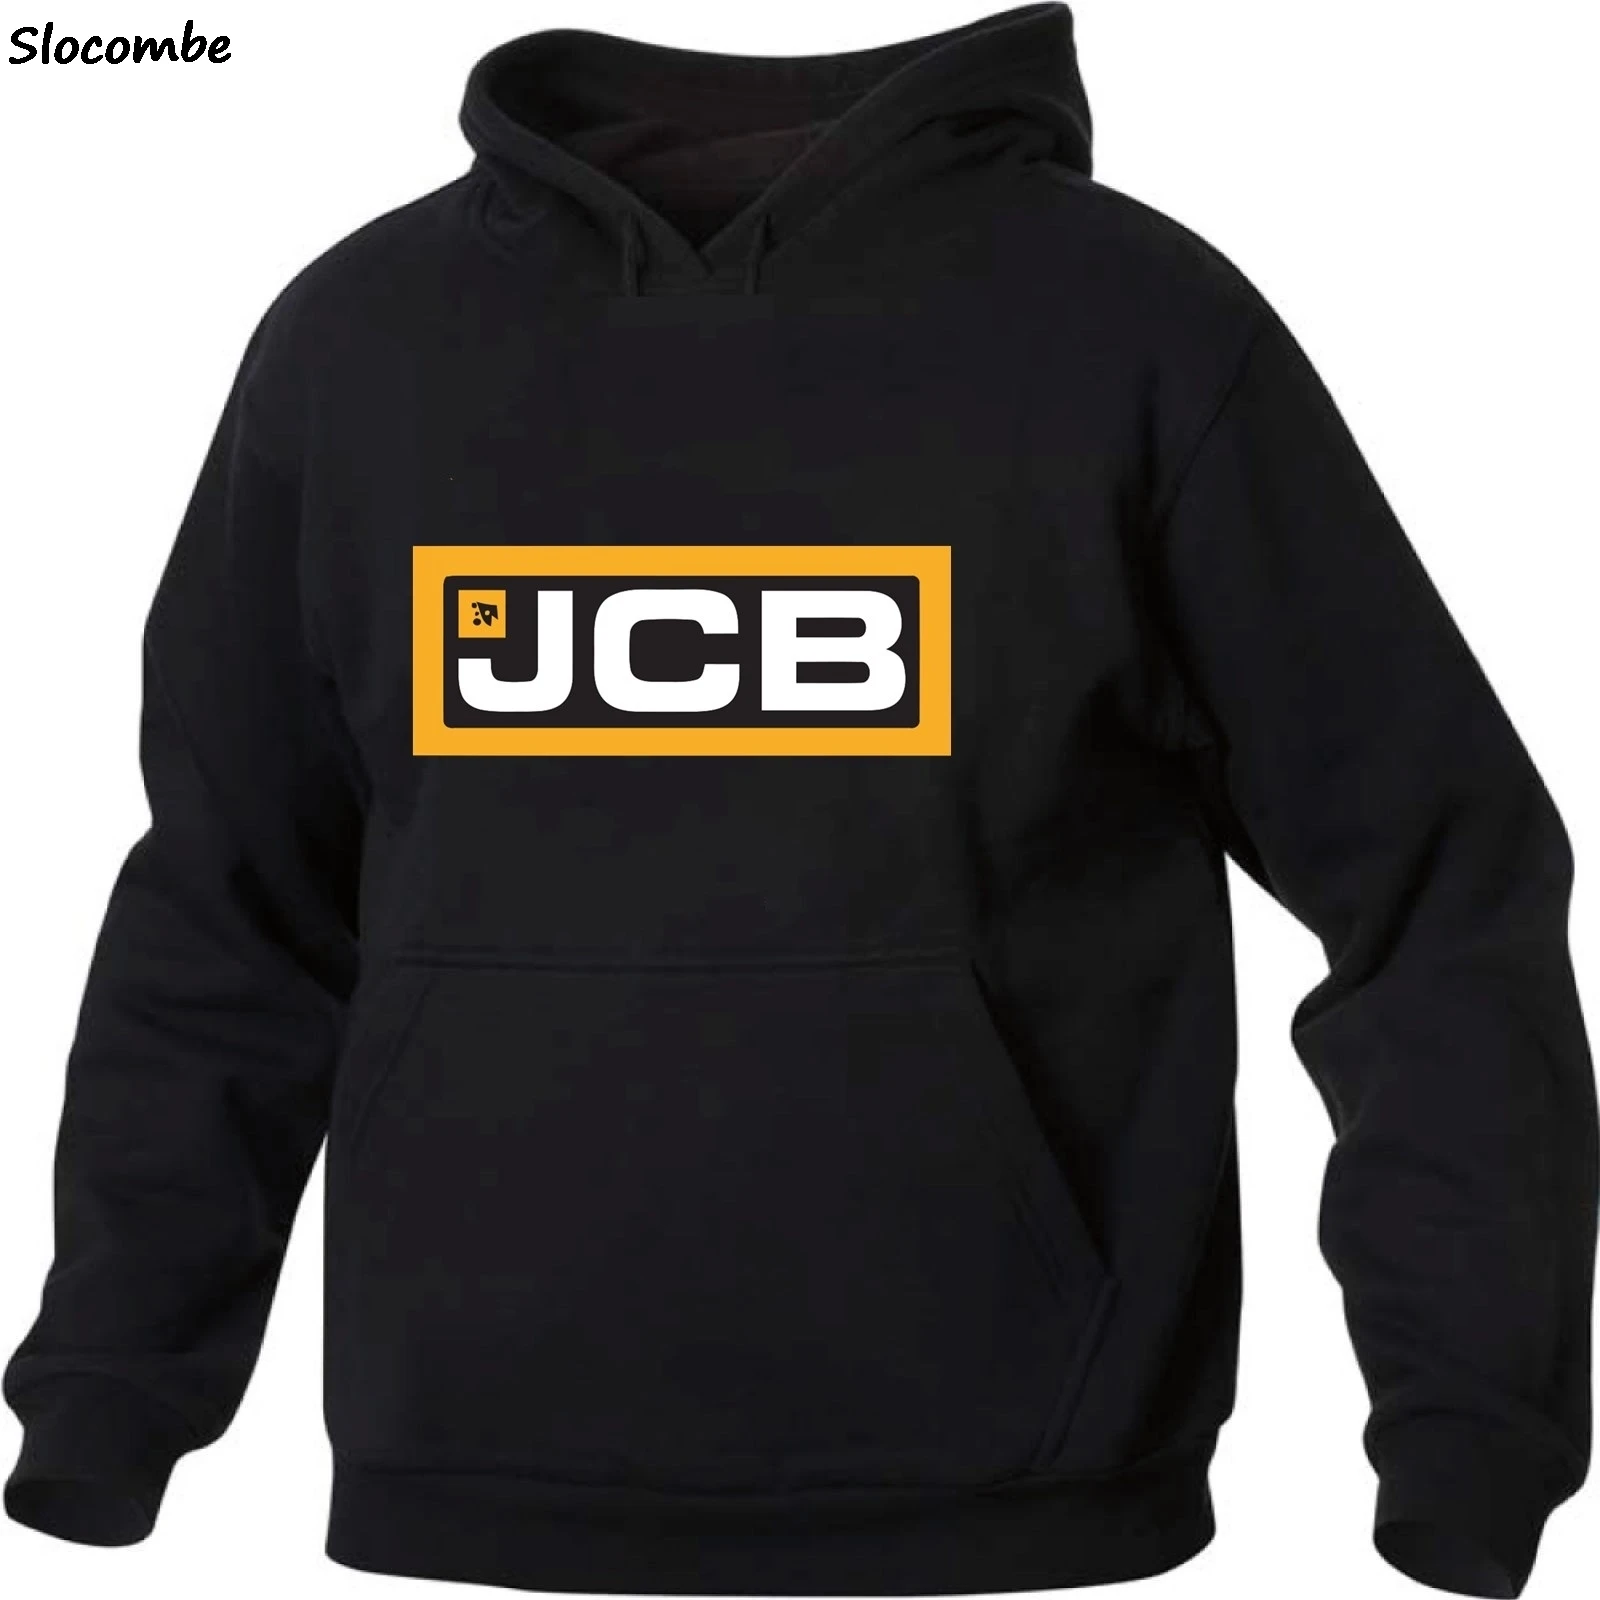 

JCB HI RES 2018 logo Hoodie Sweatshirt Men/Women Autumn Winter Fashion Tracksuit Sweatshirt